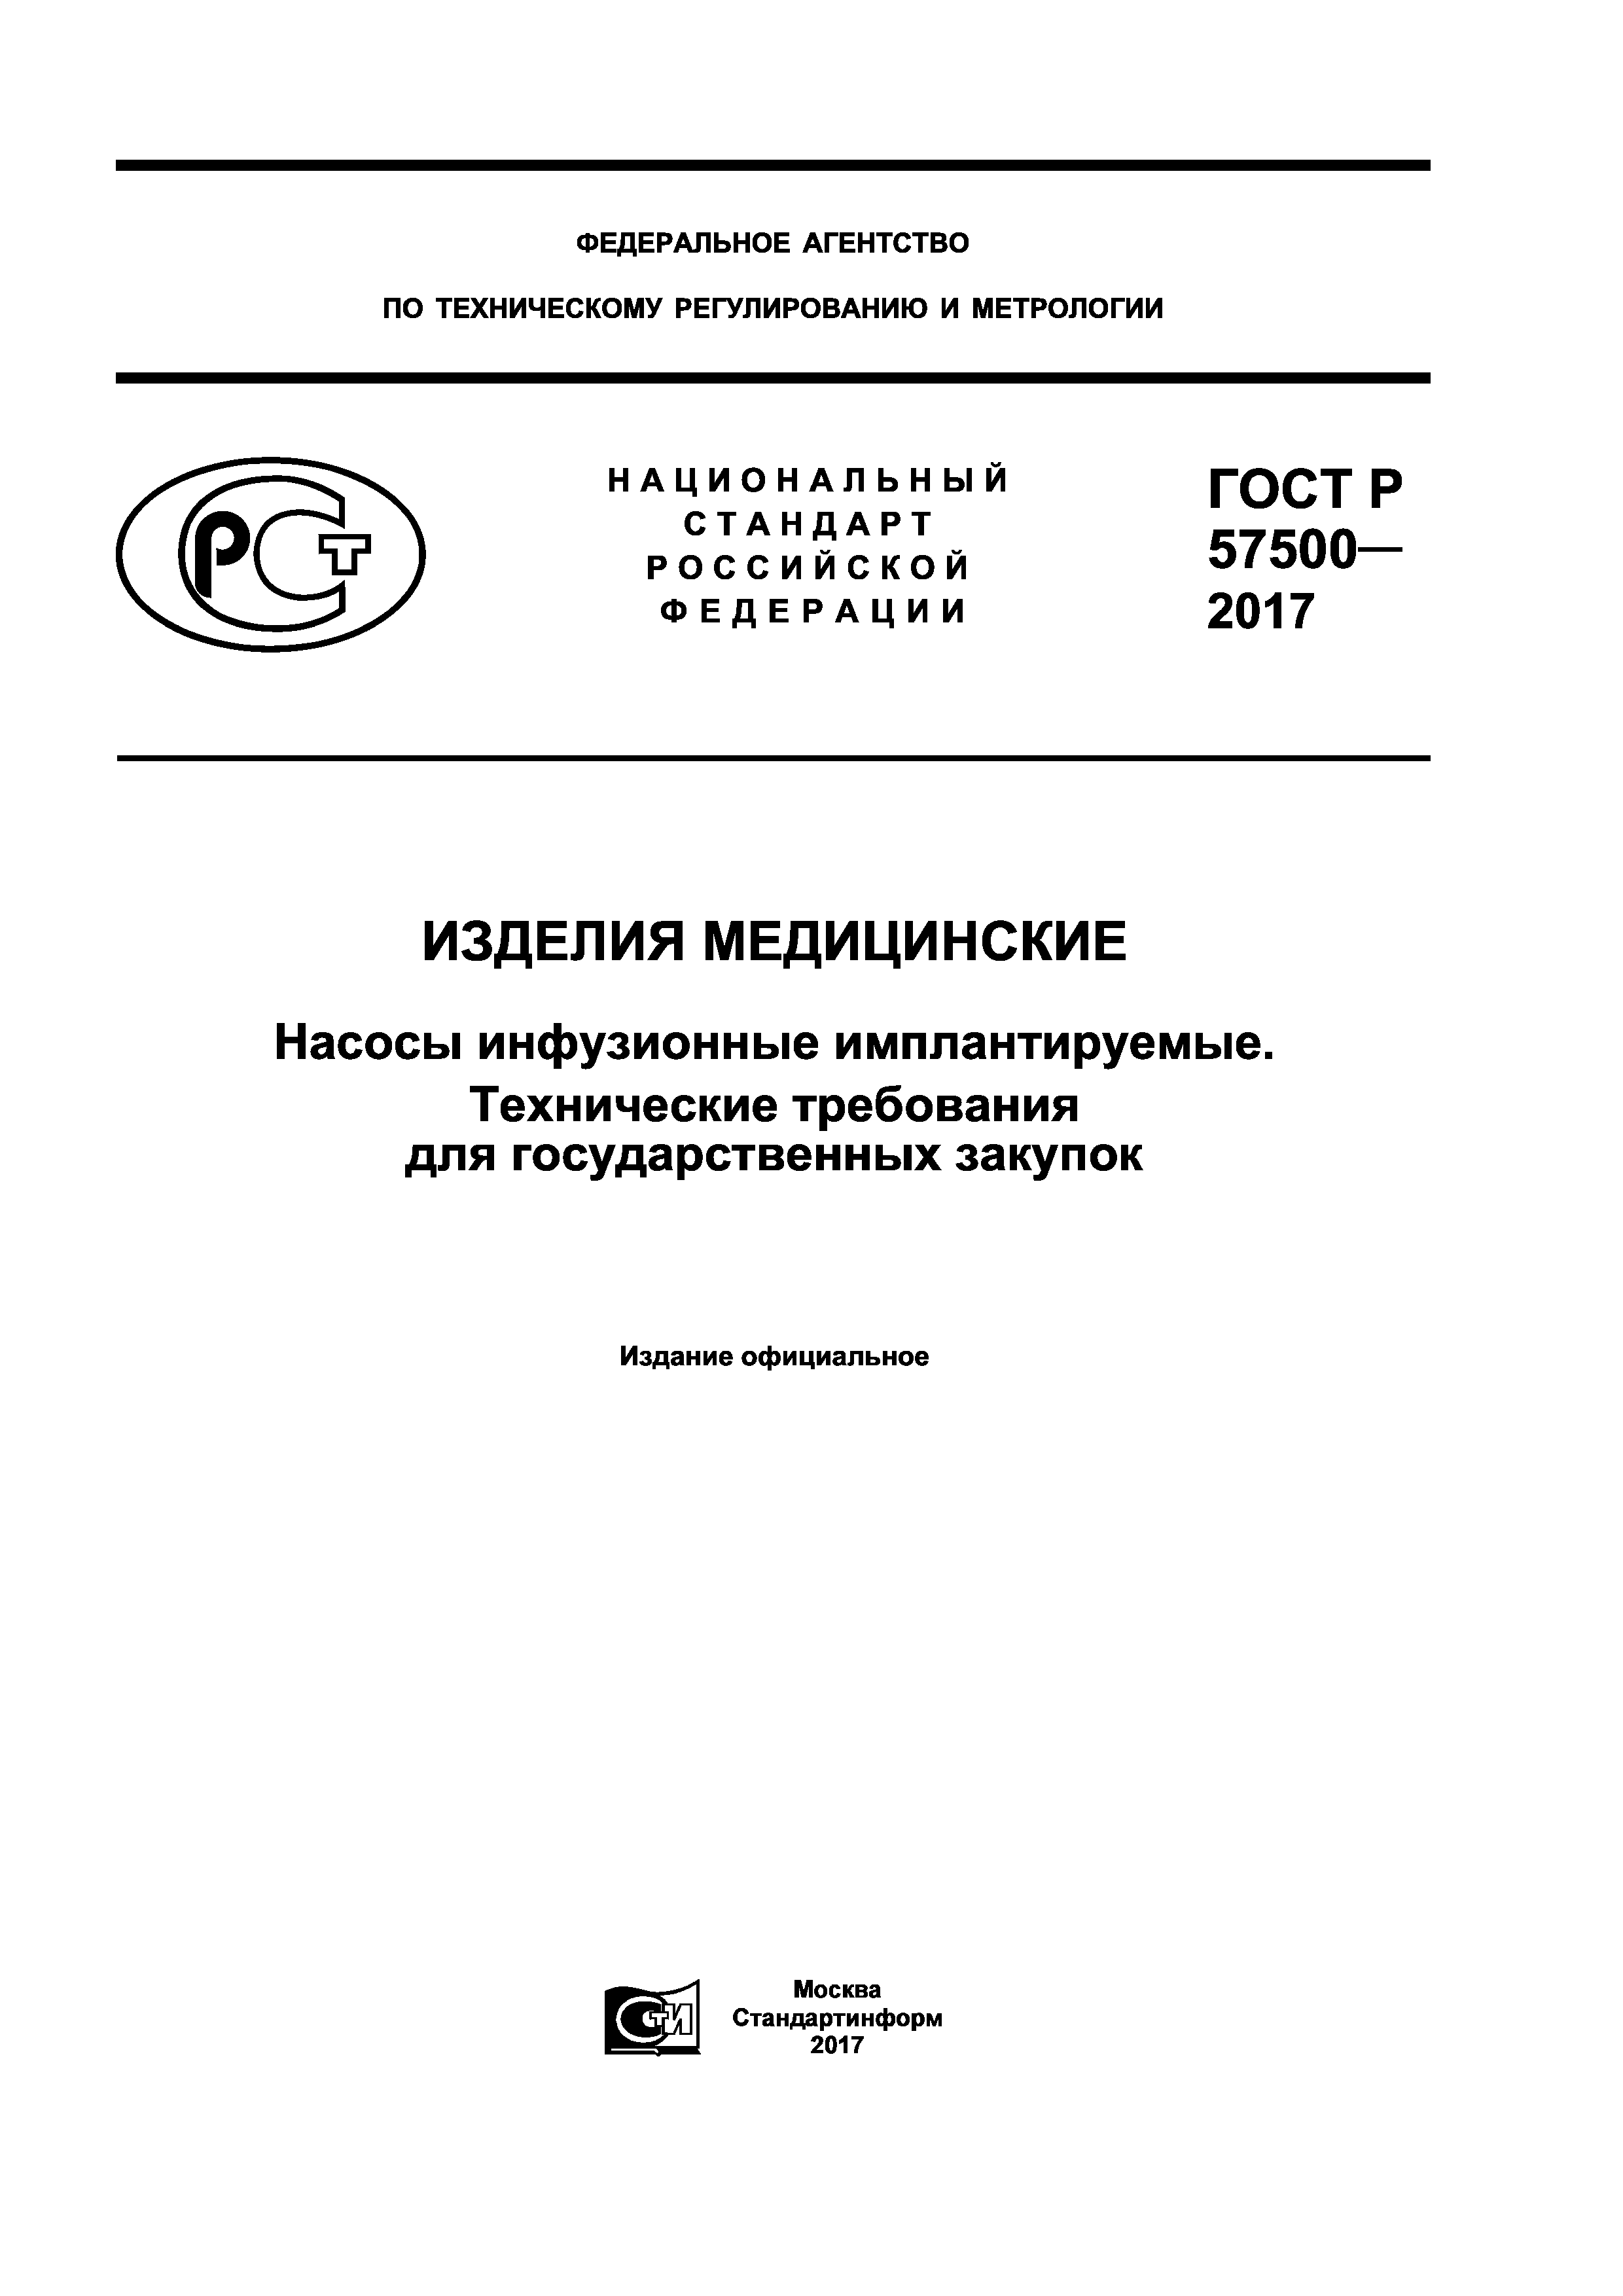 ГОСТ Р 57500-2017